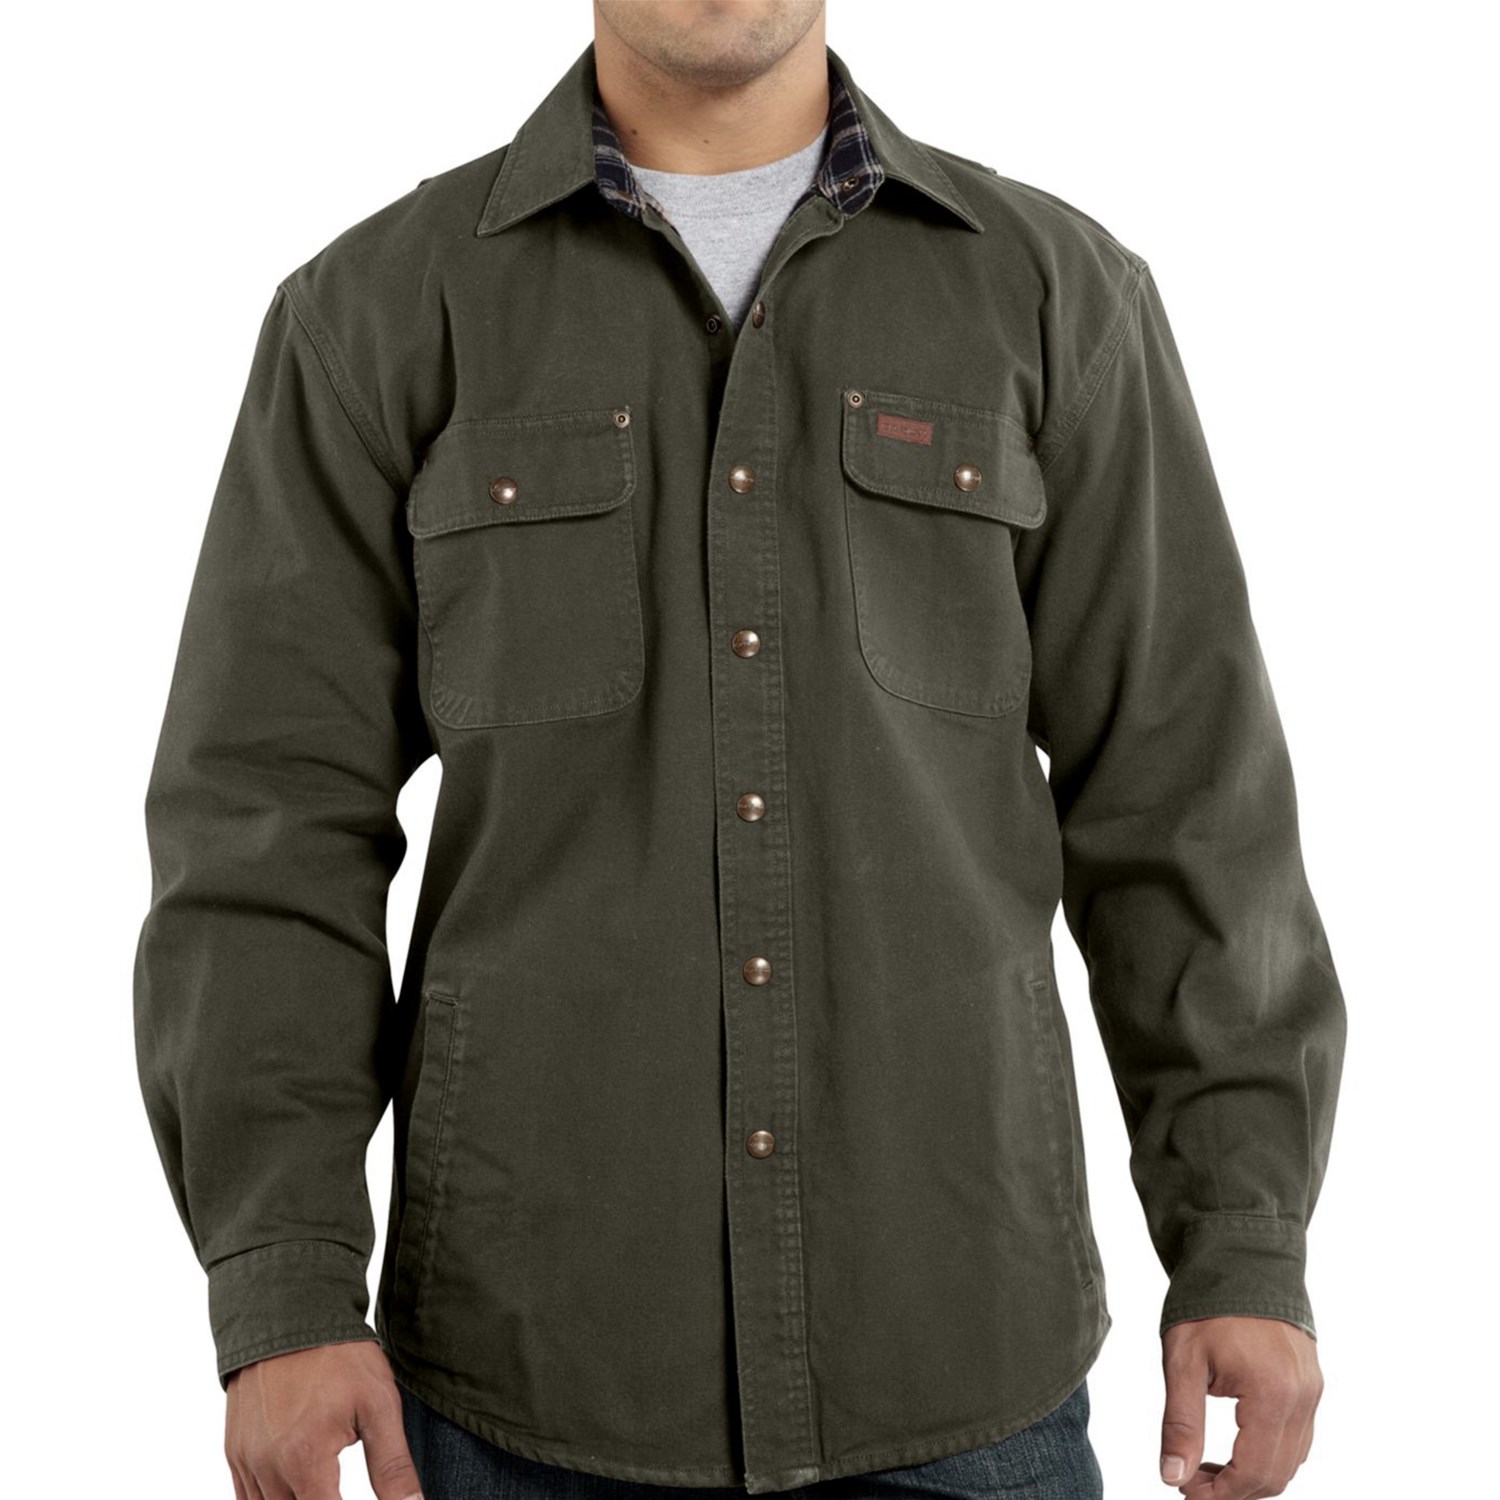 Carhartt Weathered Canvas Shirt Jacket (For Tall Men)